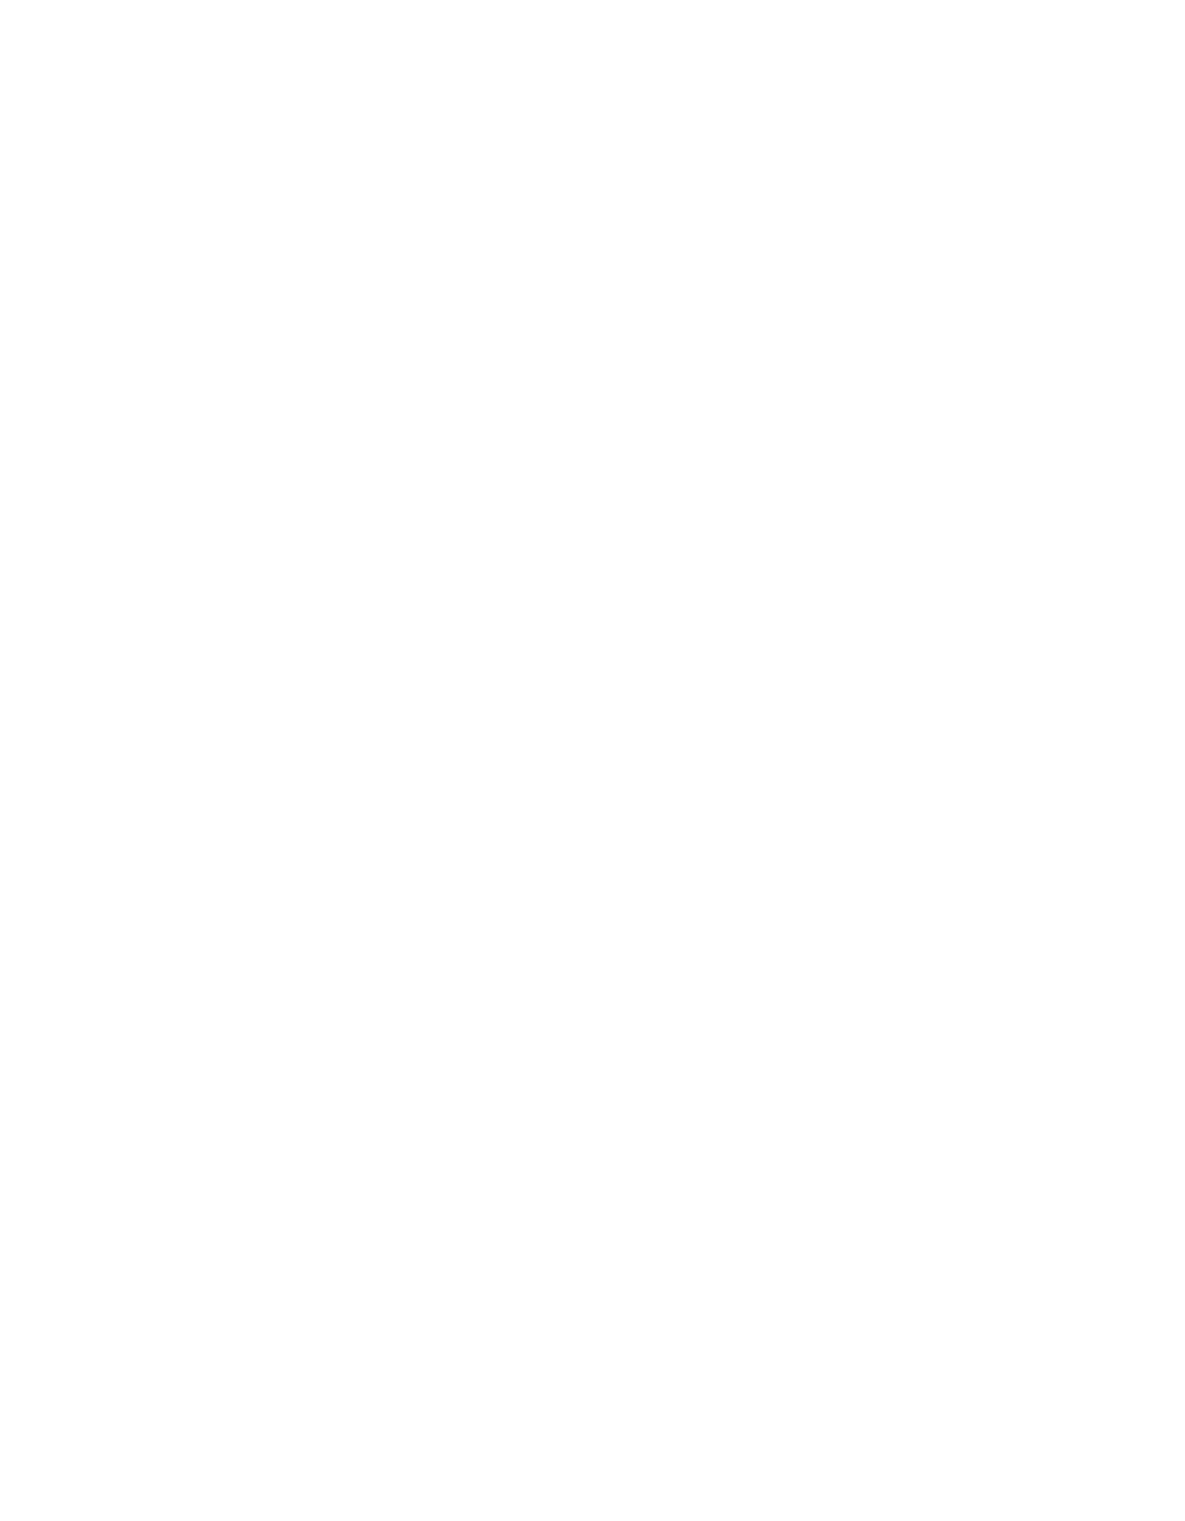 Perpetua Resources logo pour fonds sombres (PNG transparent)